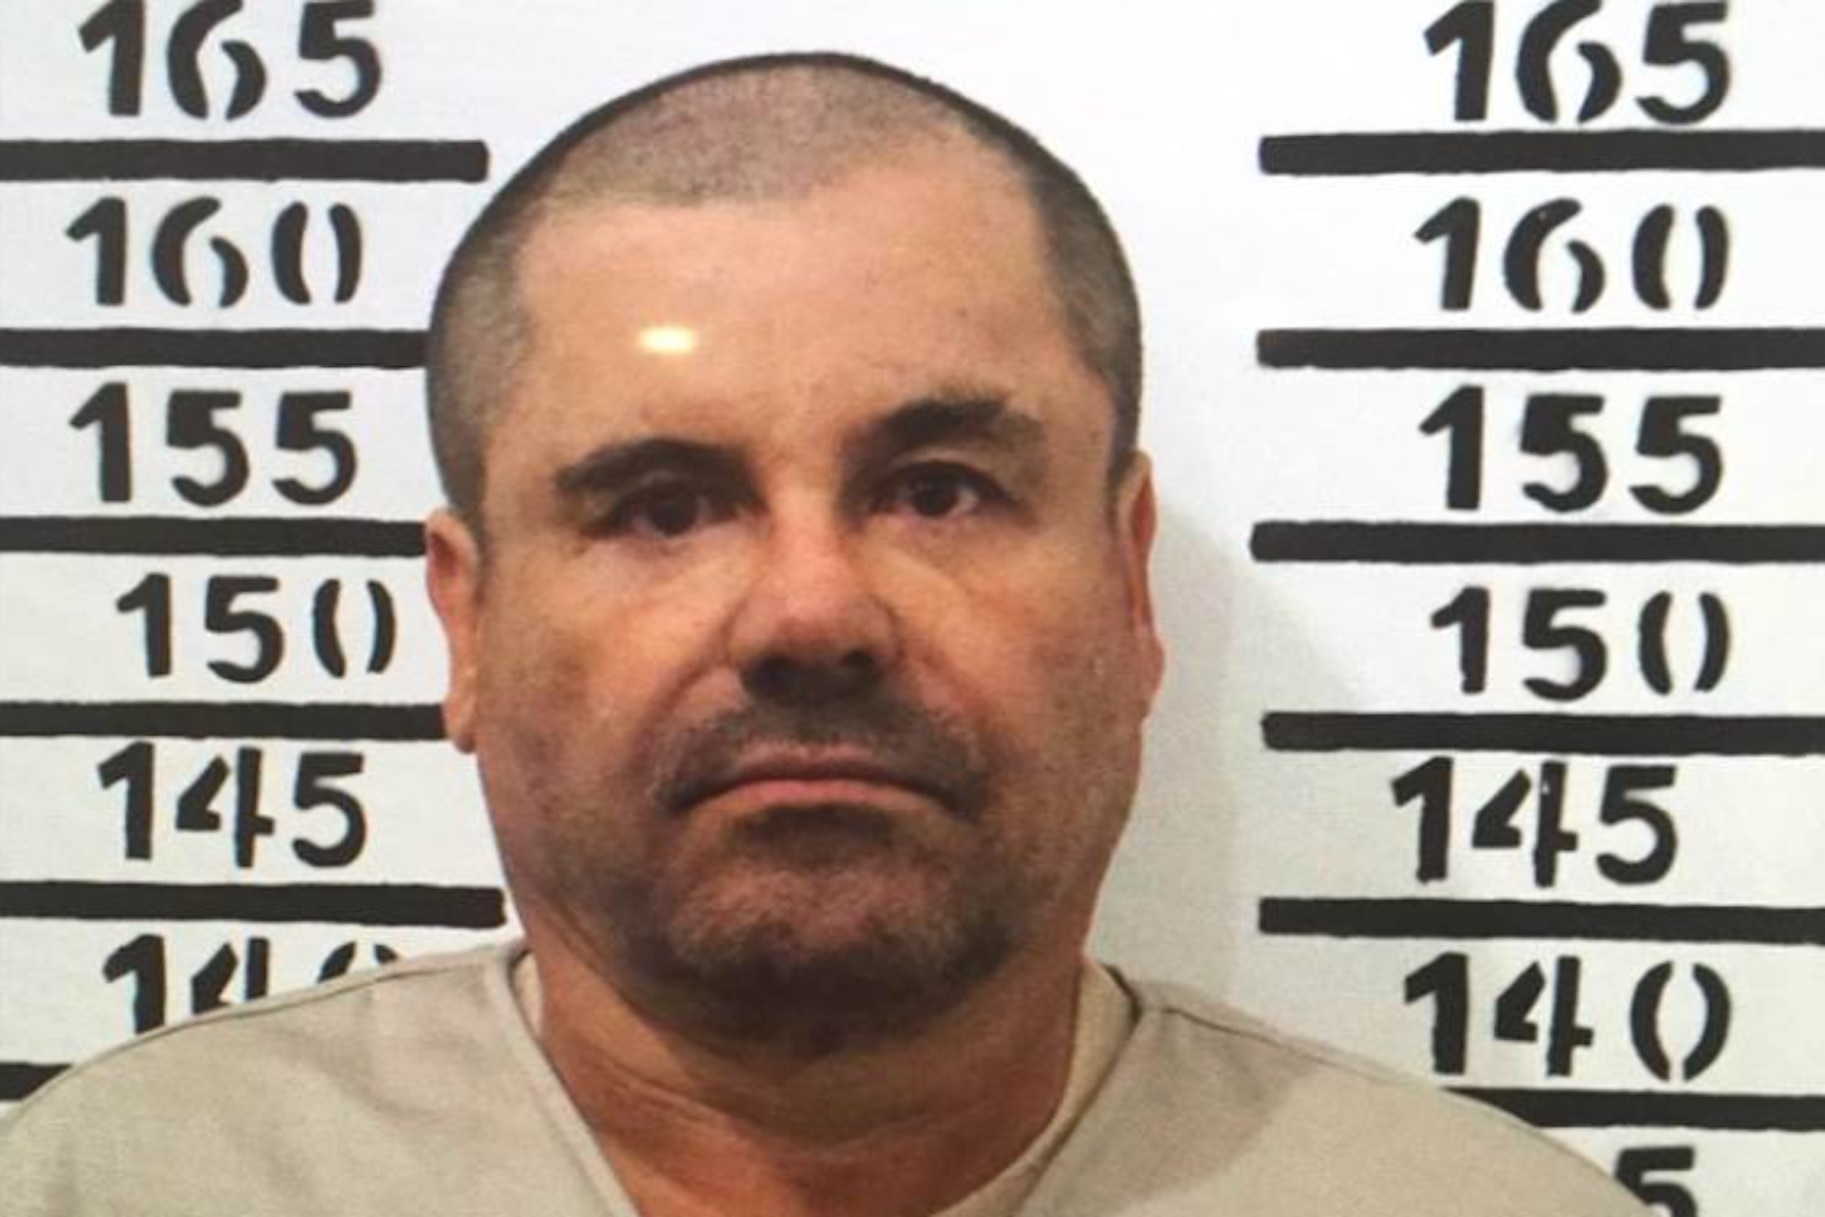 Joaquin El Chapo Guzman Notorious Leader Of Mexico S Sinaloa Drug Cartel On Trial Crime Time